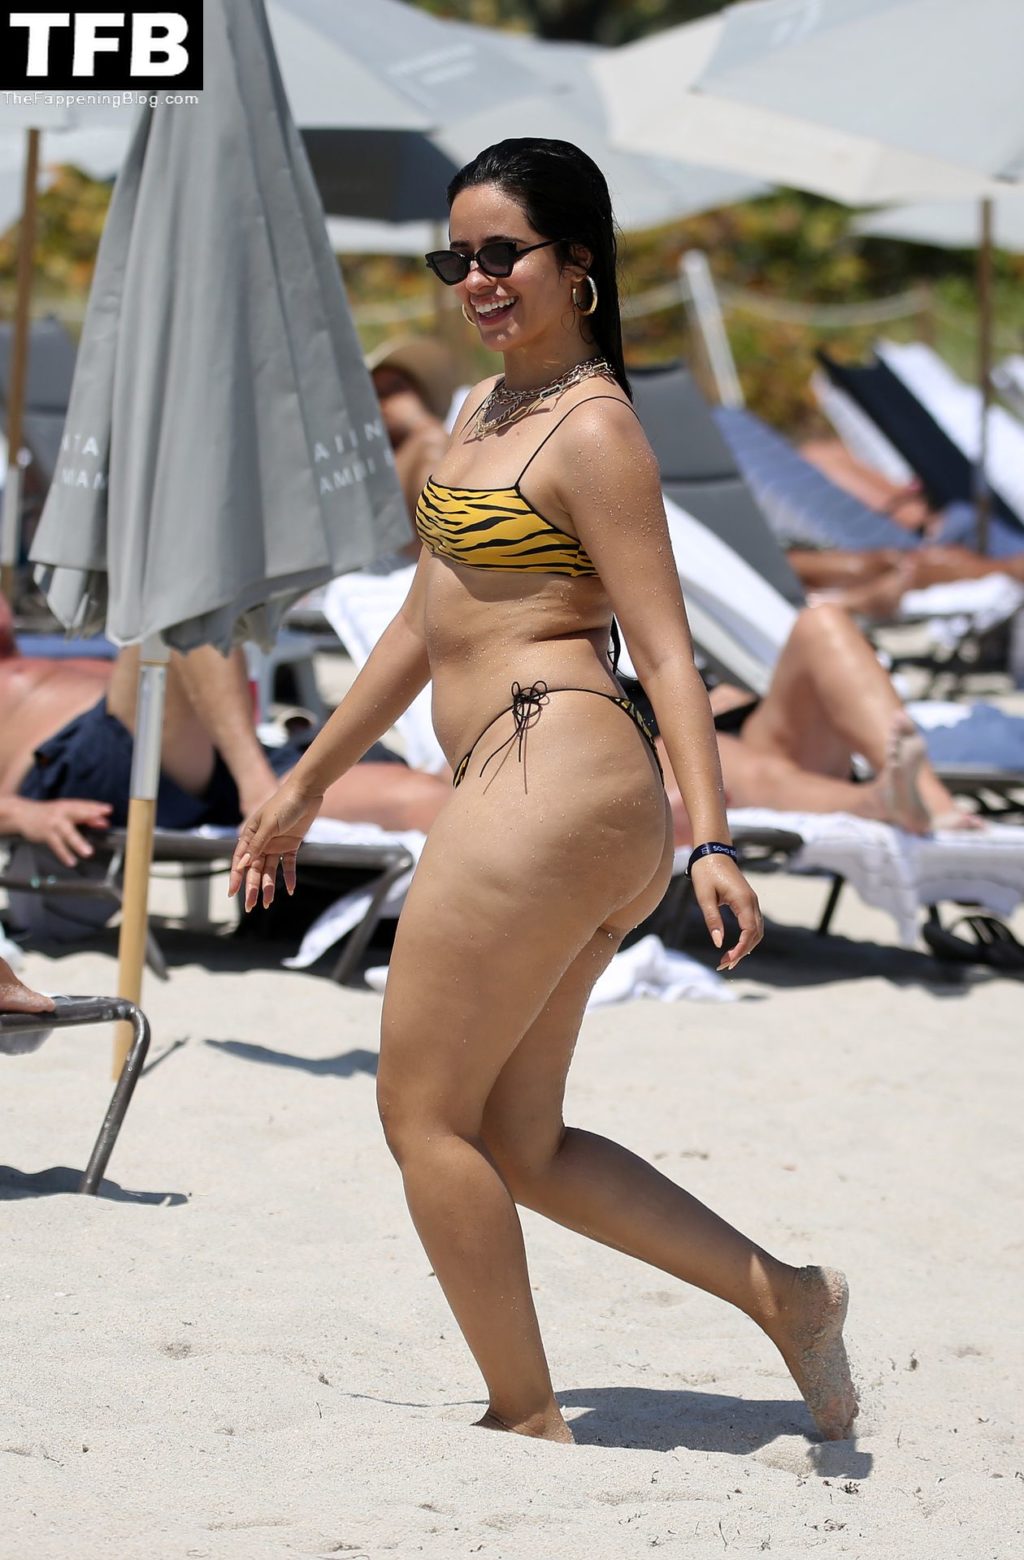 Camila Cabello Sexy The Fappening Blog 64 1024x1560 - Camila Cabello Displays Her Summer-Ready Body in Miami (108 Photos)